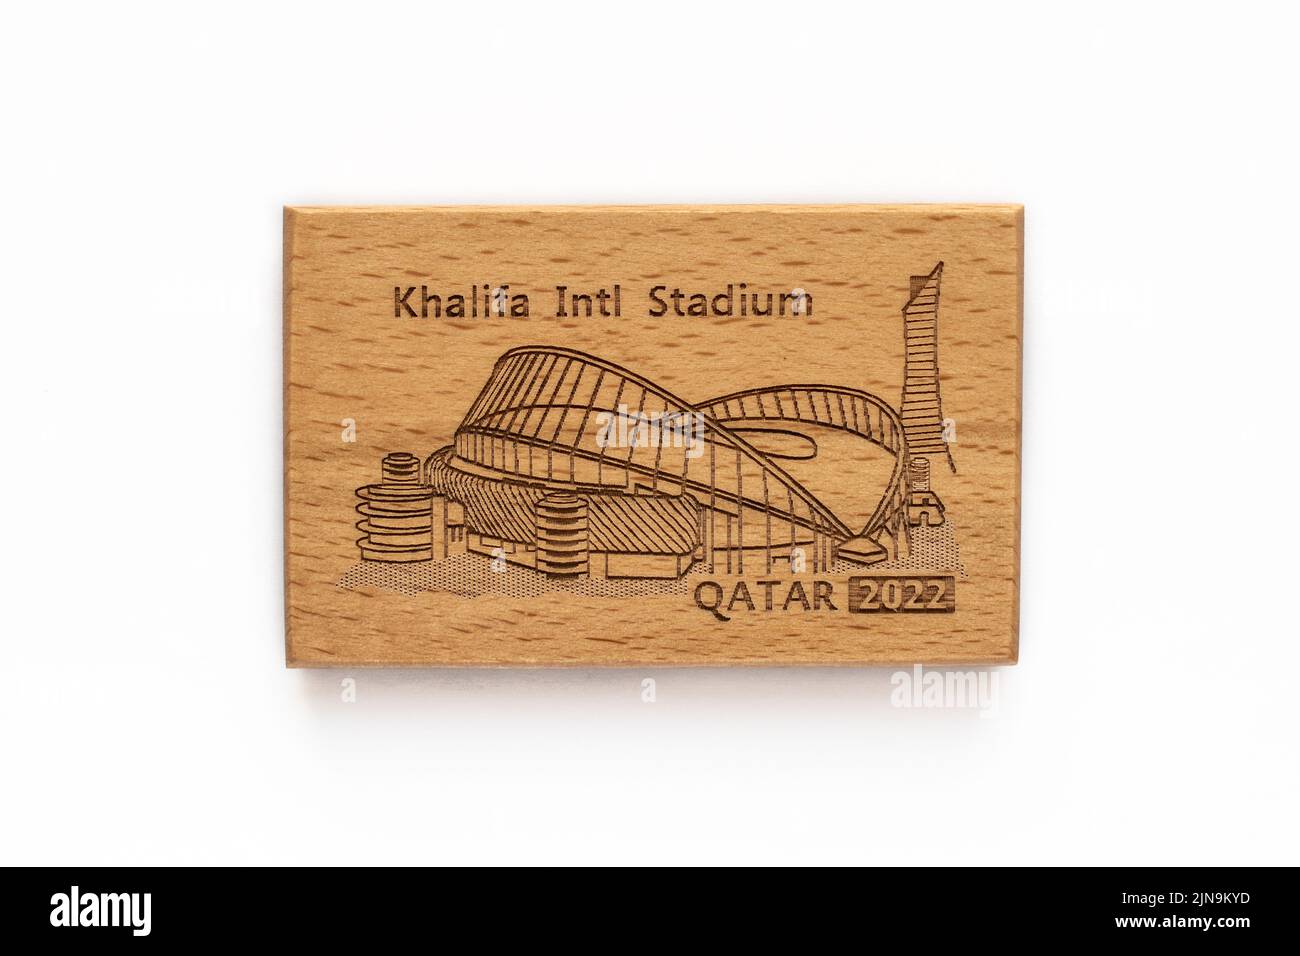 DOHA, QATAR - AUGUST 10, 2022: Khalifa International Stadium Qatar fridge magnet. Qatar will be hosting FIFA World Cup 2022. Stock Photo